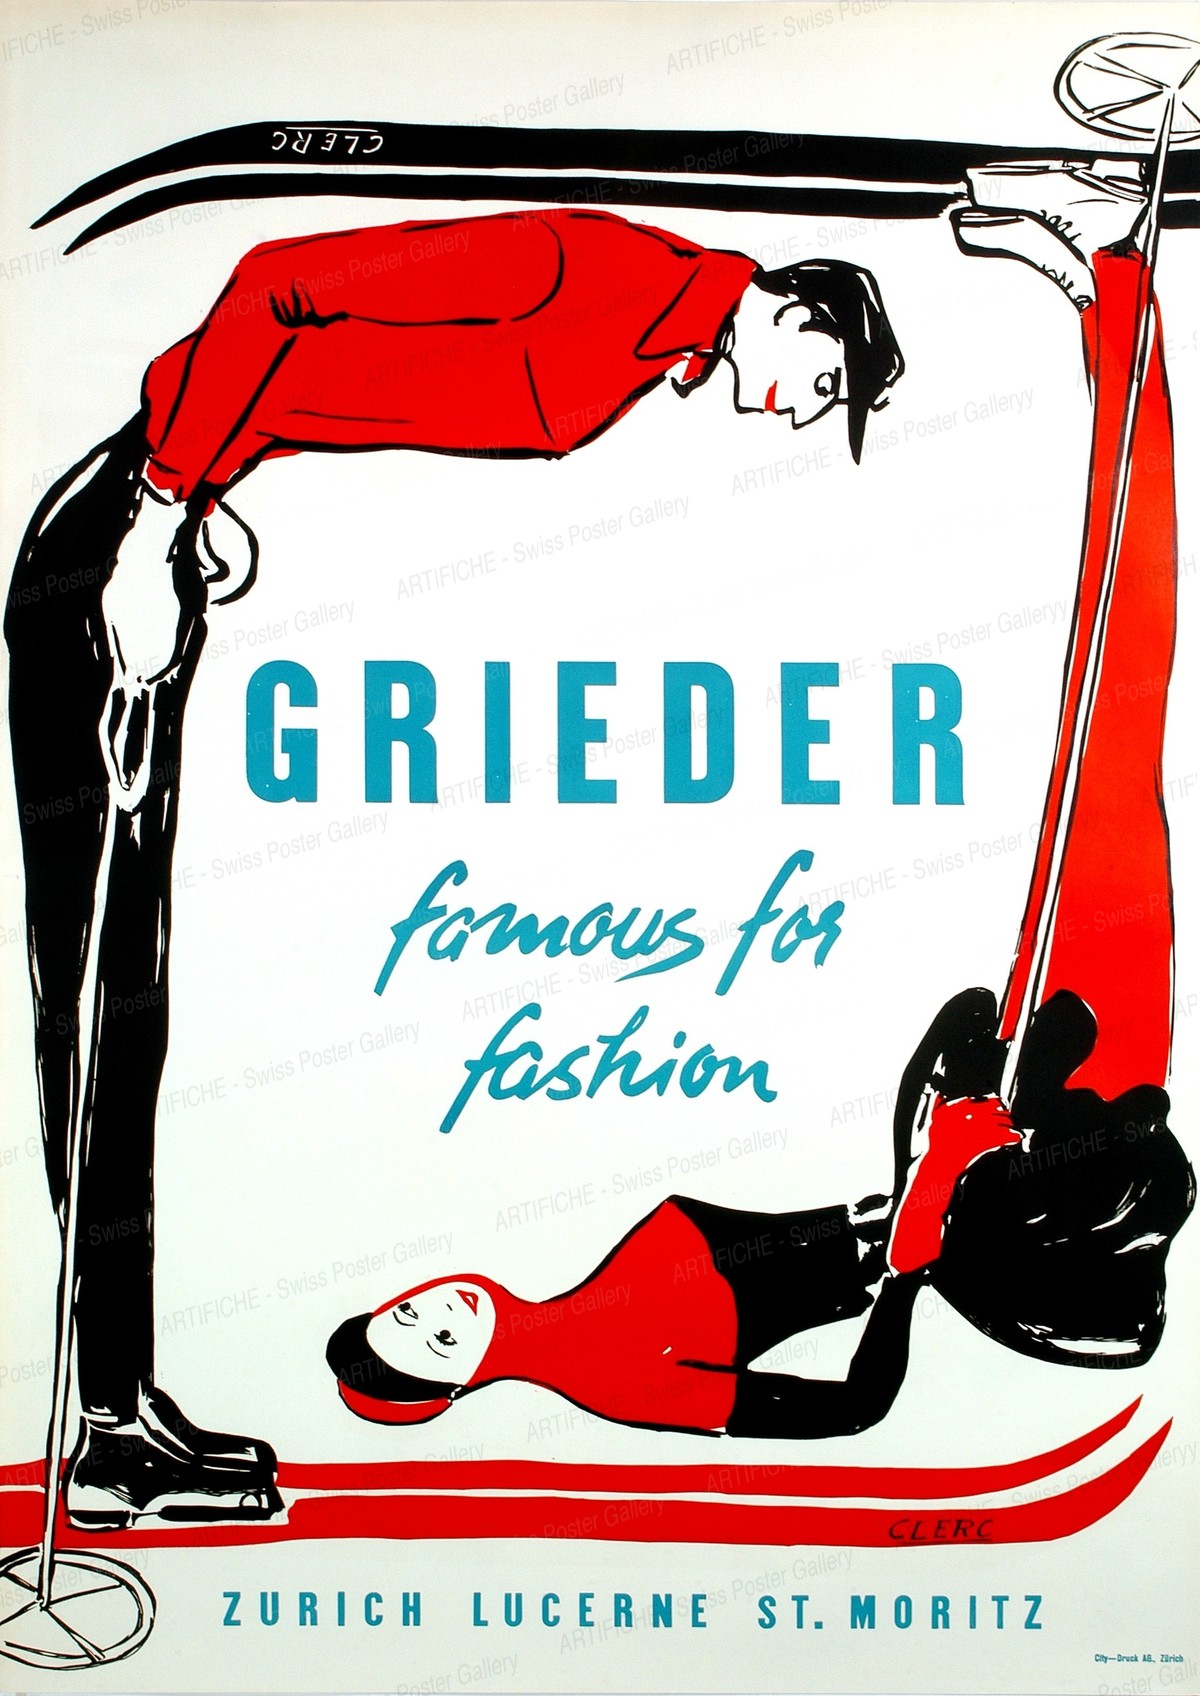 Grieder – Bon Genie Fashion Store, Clerc